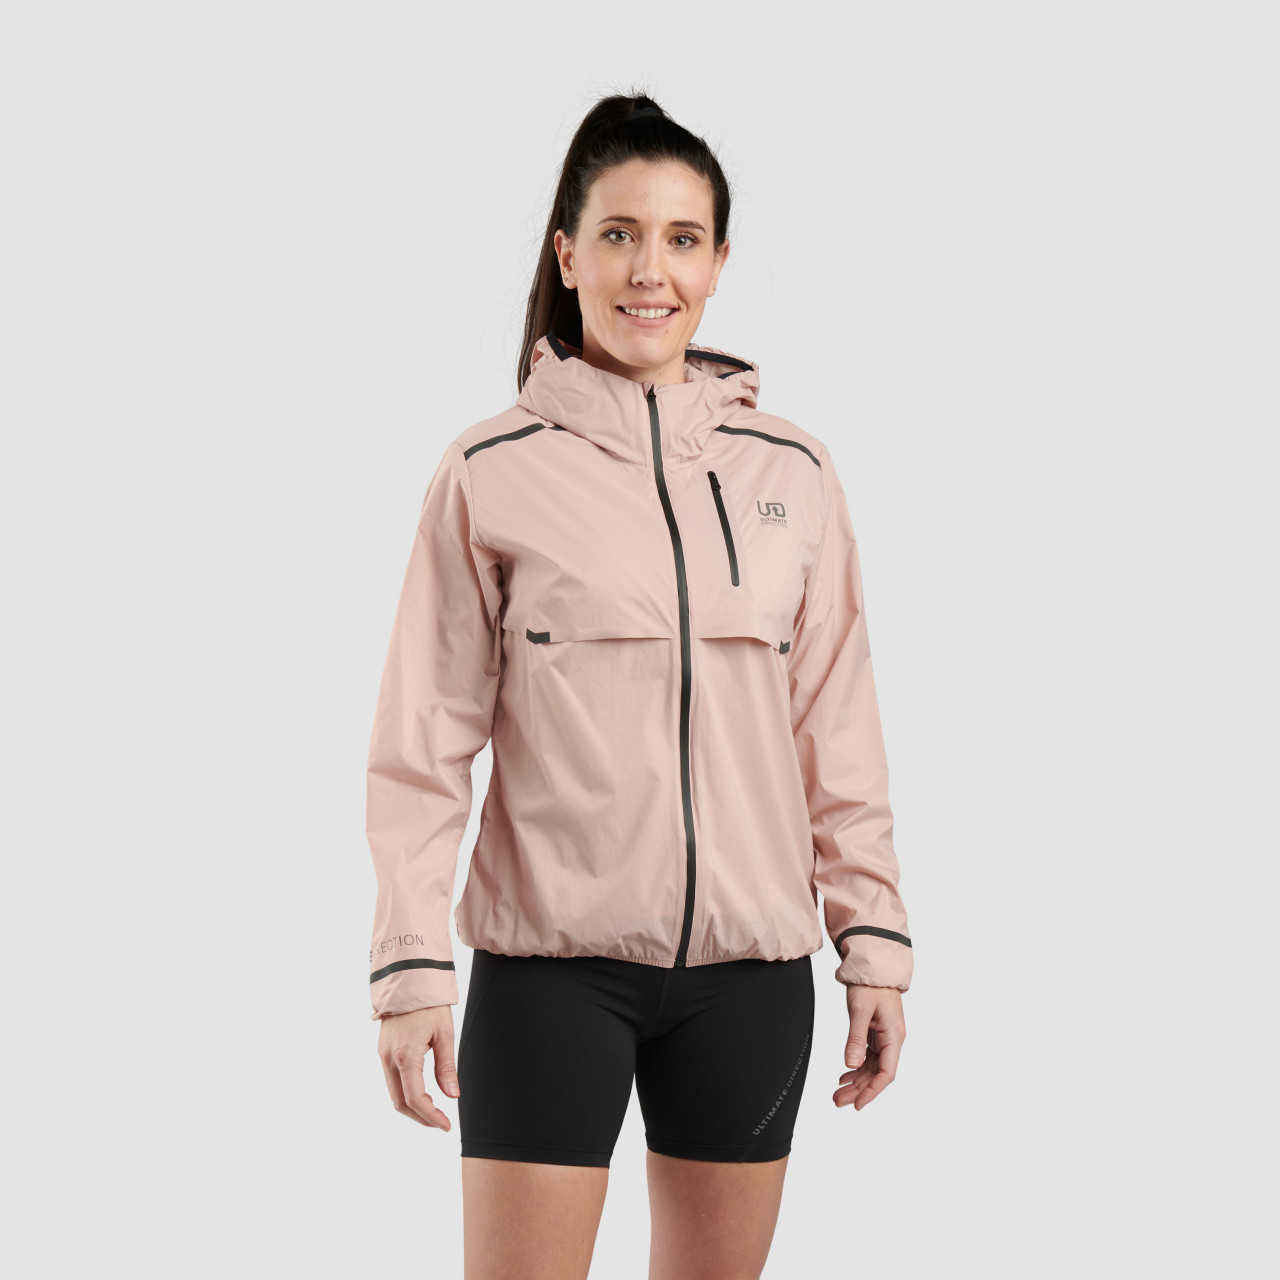 Ultimate Direction Women's Aerolight Wind Jacket in Clay Size XL